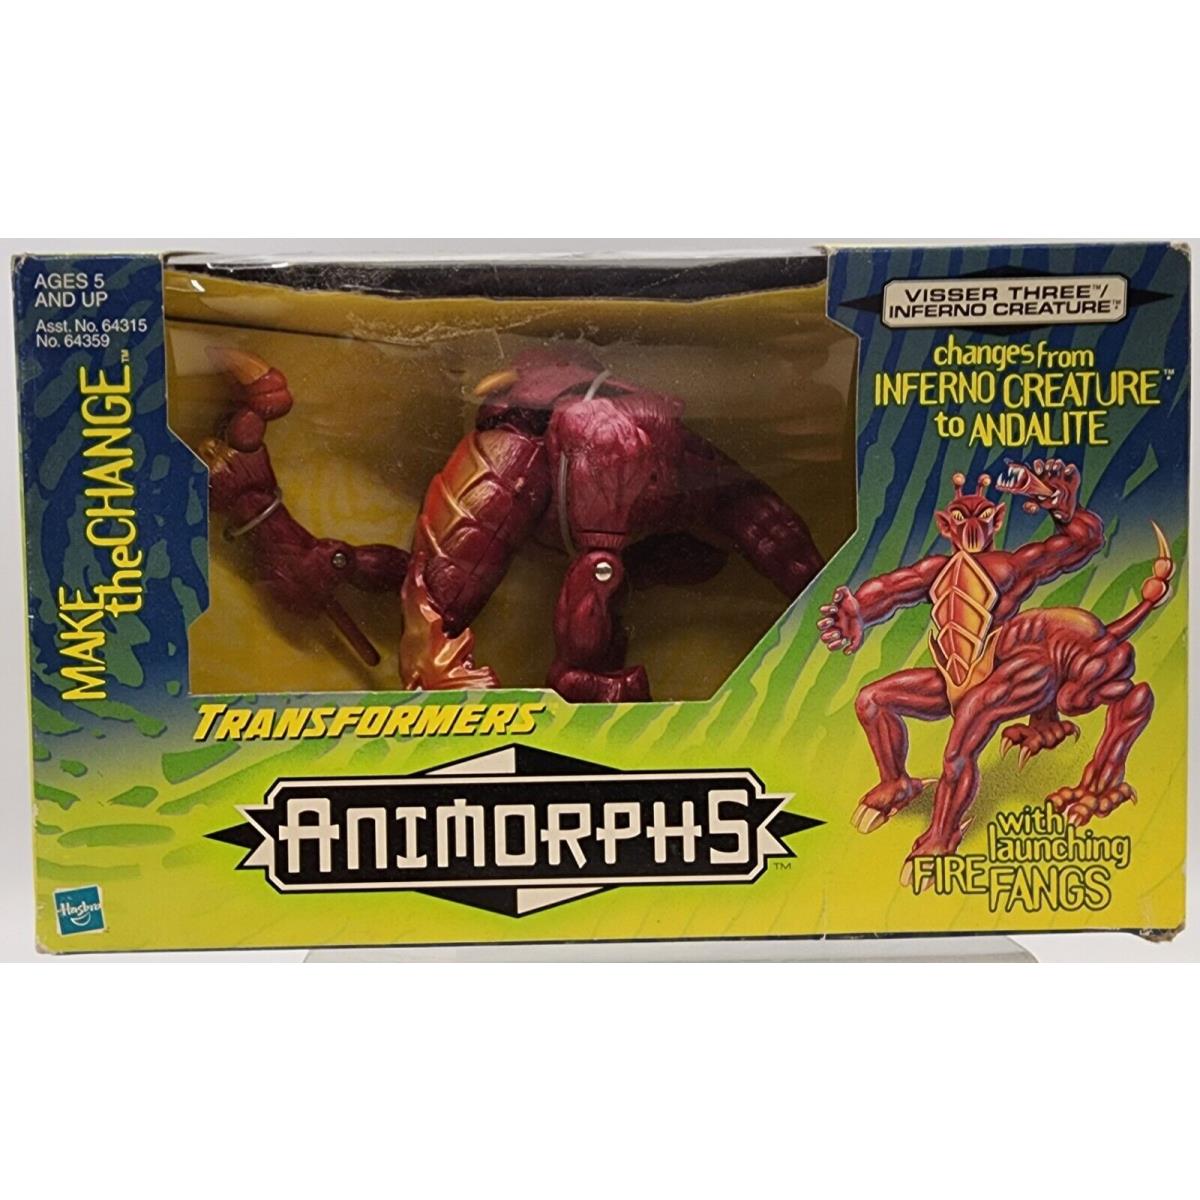 Transformers Animorphs Visser Three/inferno Creature 1998 Figure